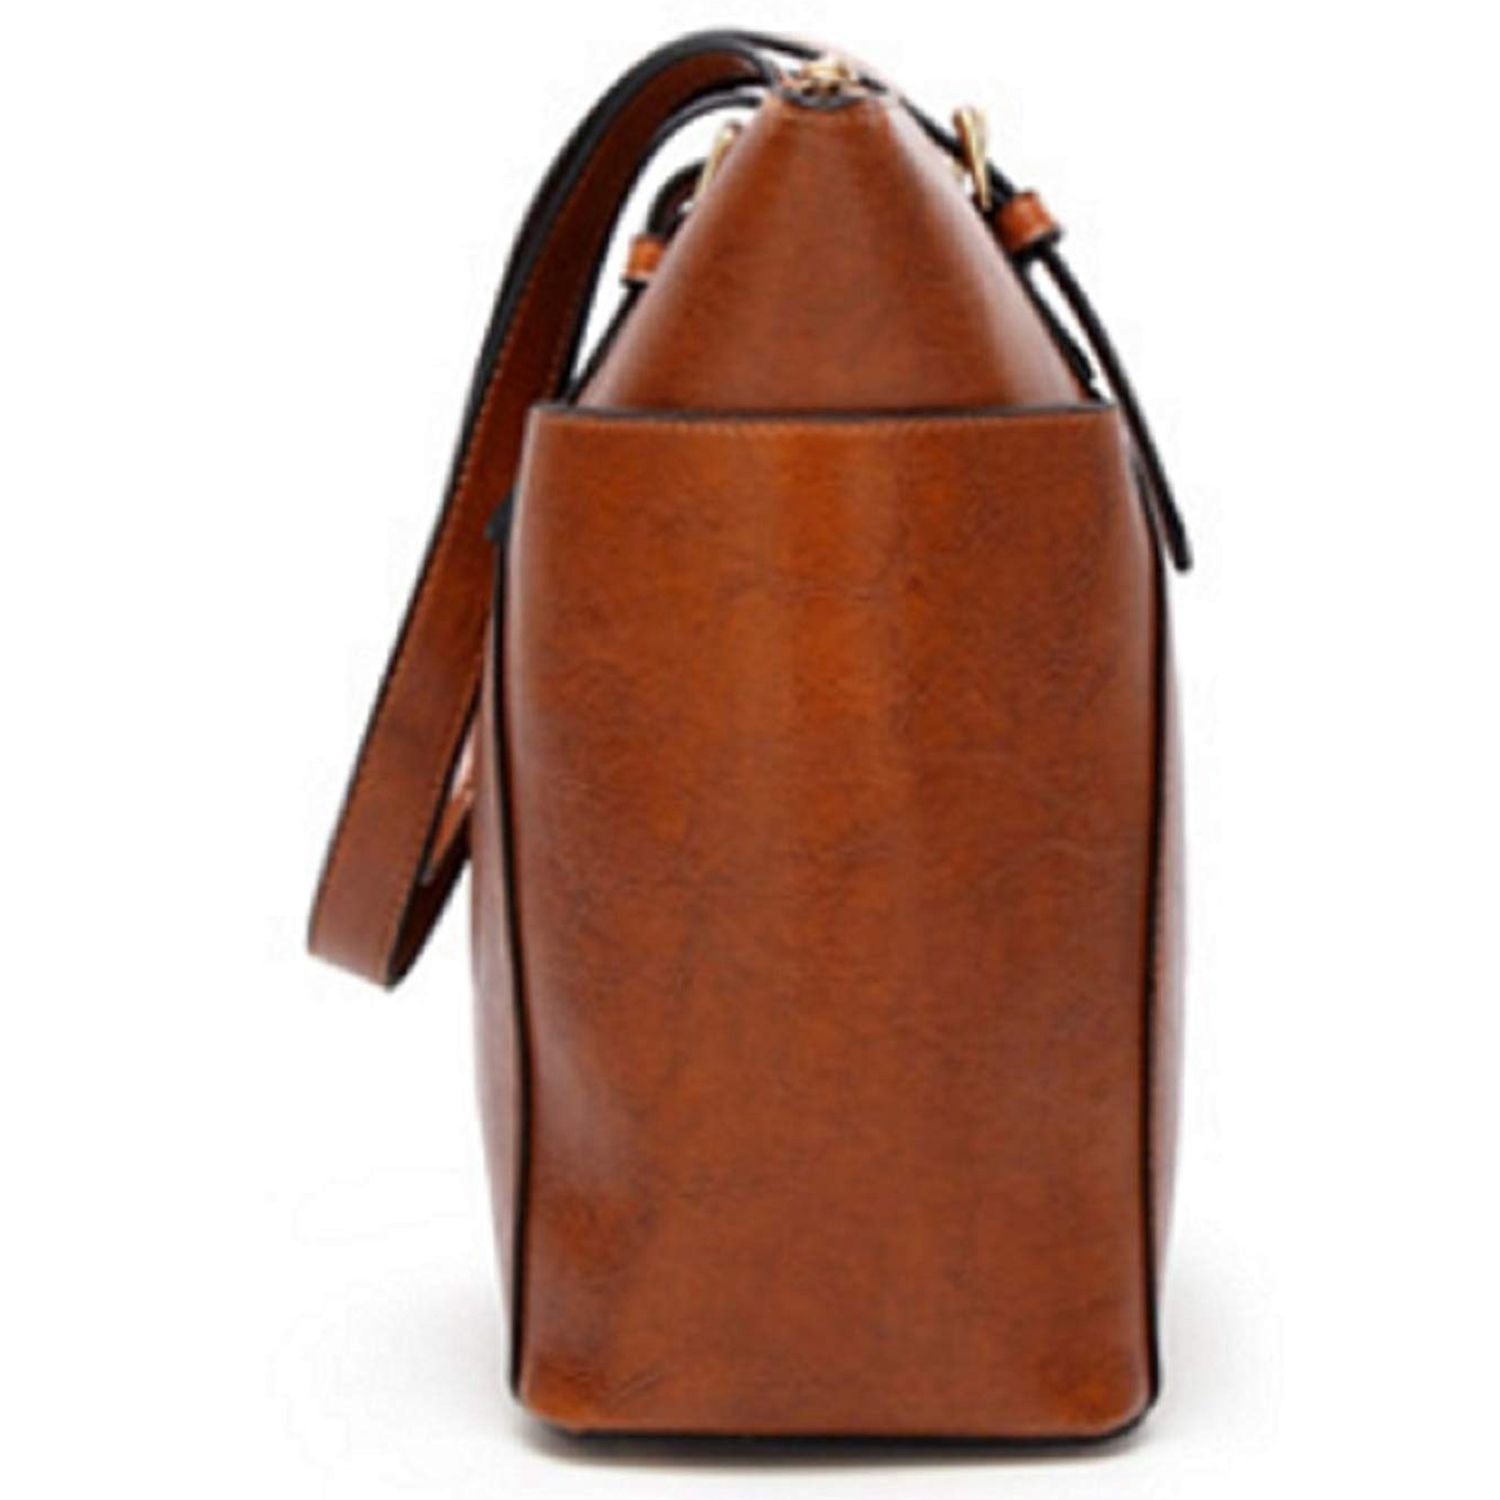 Business bag fashion bag leather bag for IPAD storage A4 size - ebowsos